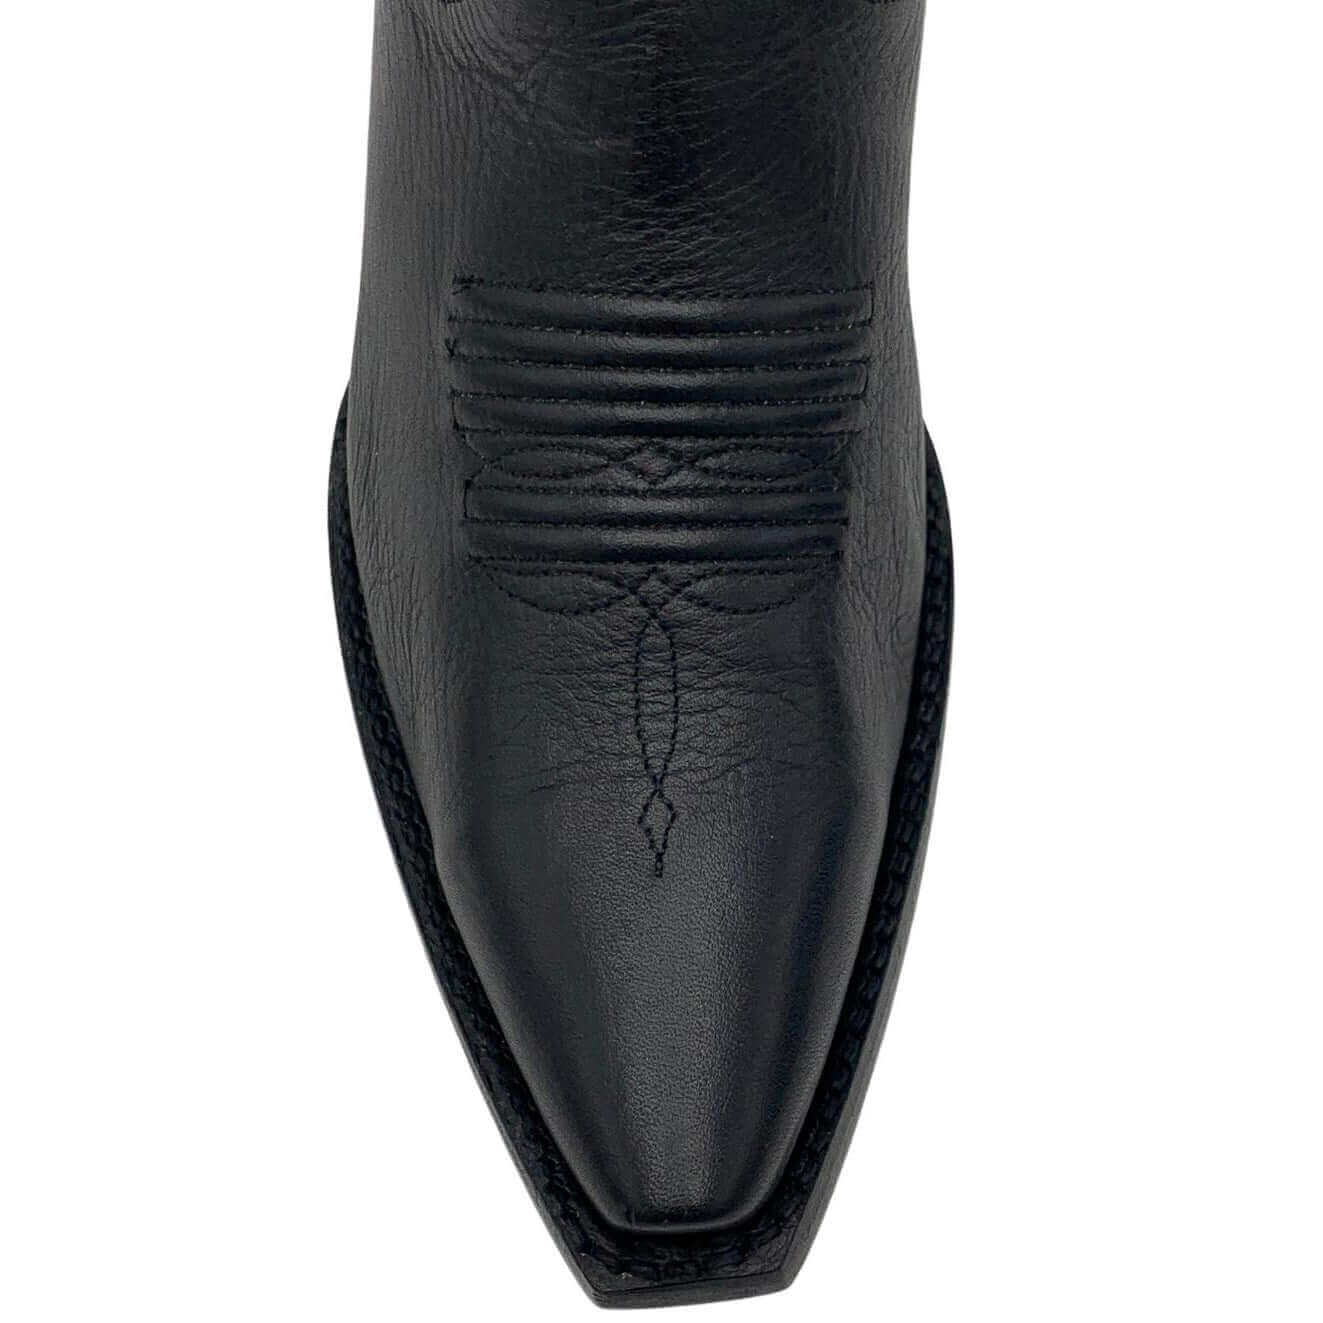 Retro Shorty Snip Toe Black - Vaccari Boots